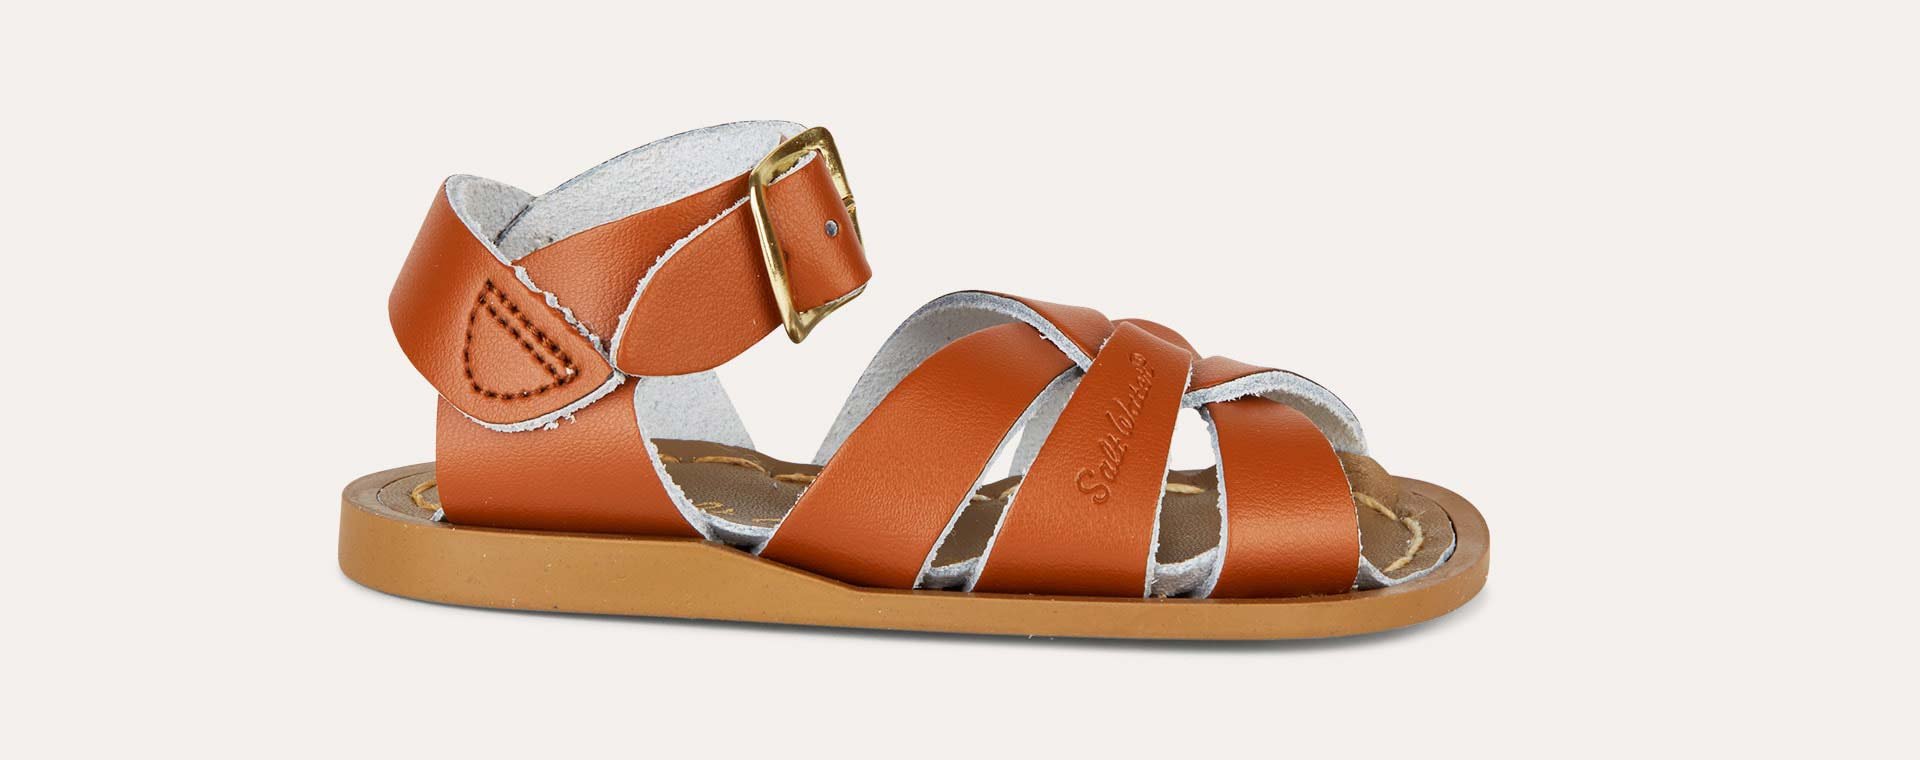 salt-water-sandals-original-sandal-brown-tan-1920x760_01.jpeg